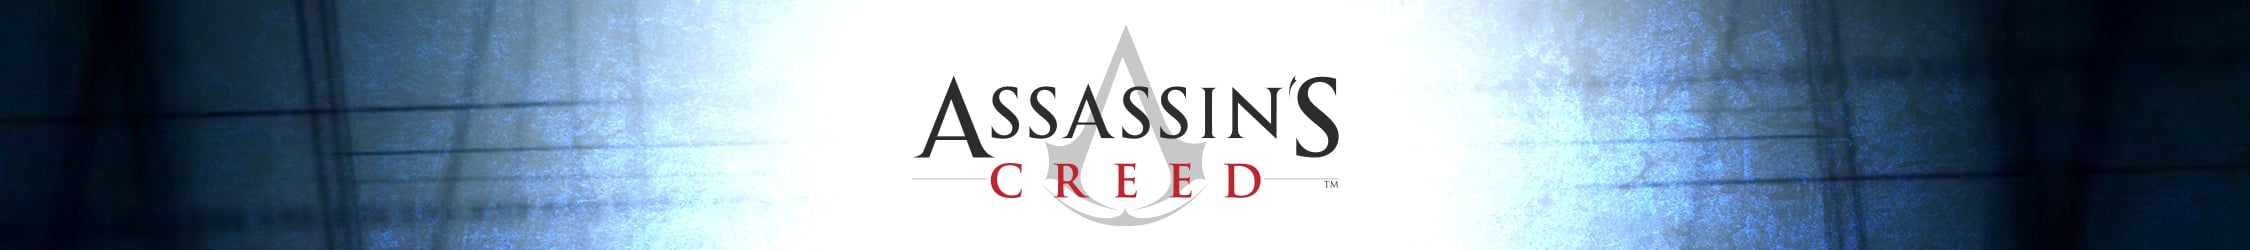 AssassinsCreed